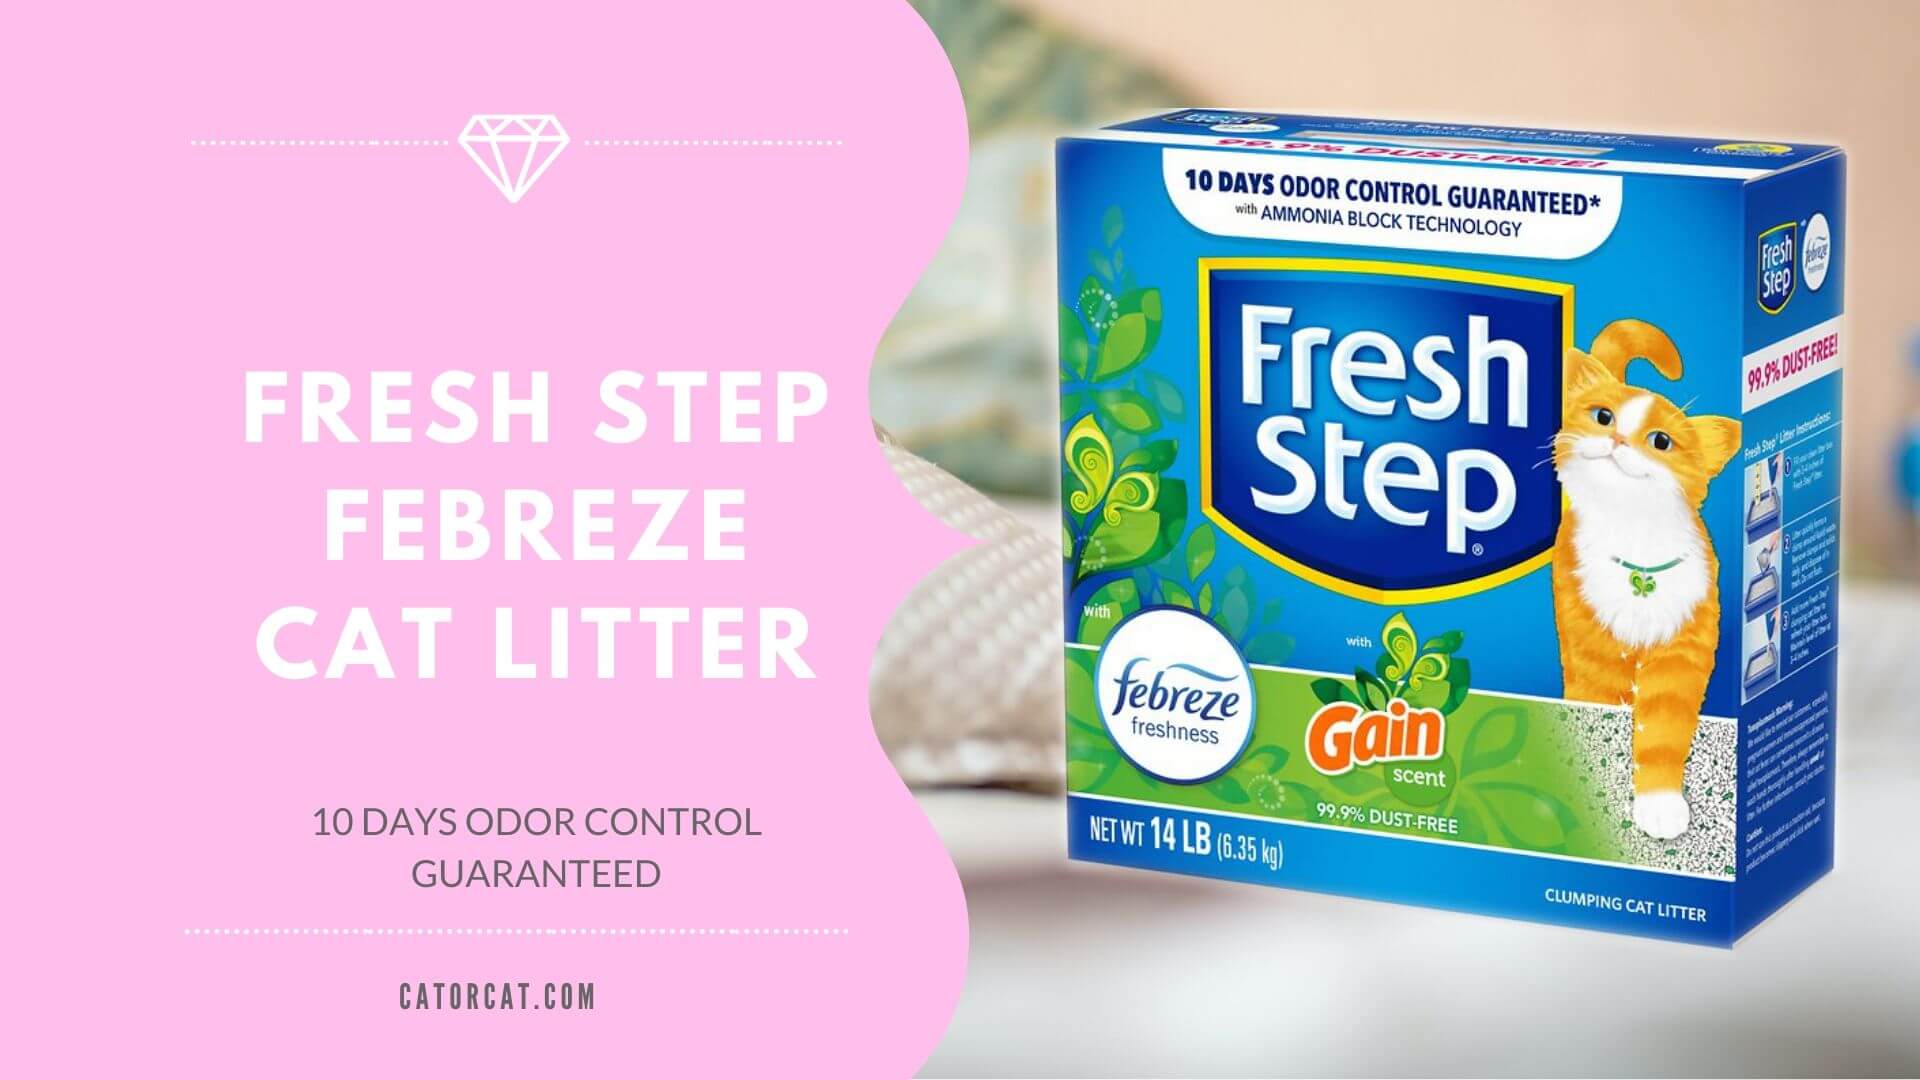 Fresh Step Cat Litter Febreze Freshness 10 Days Odor Control